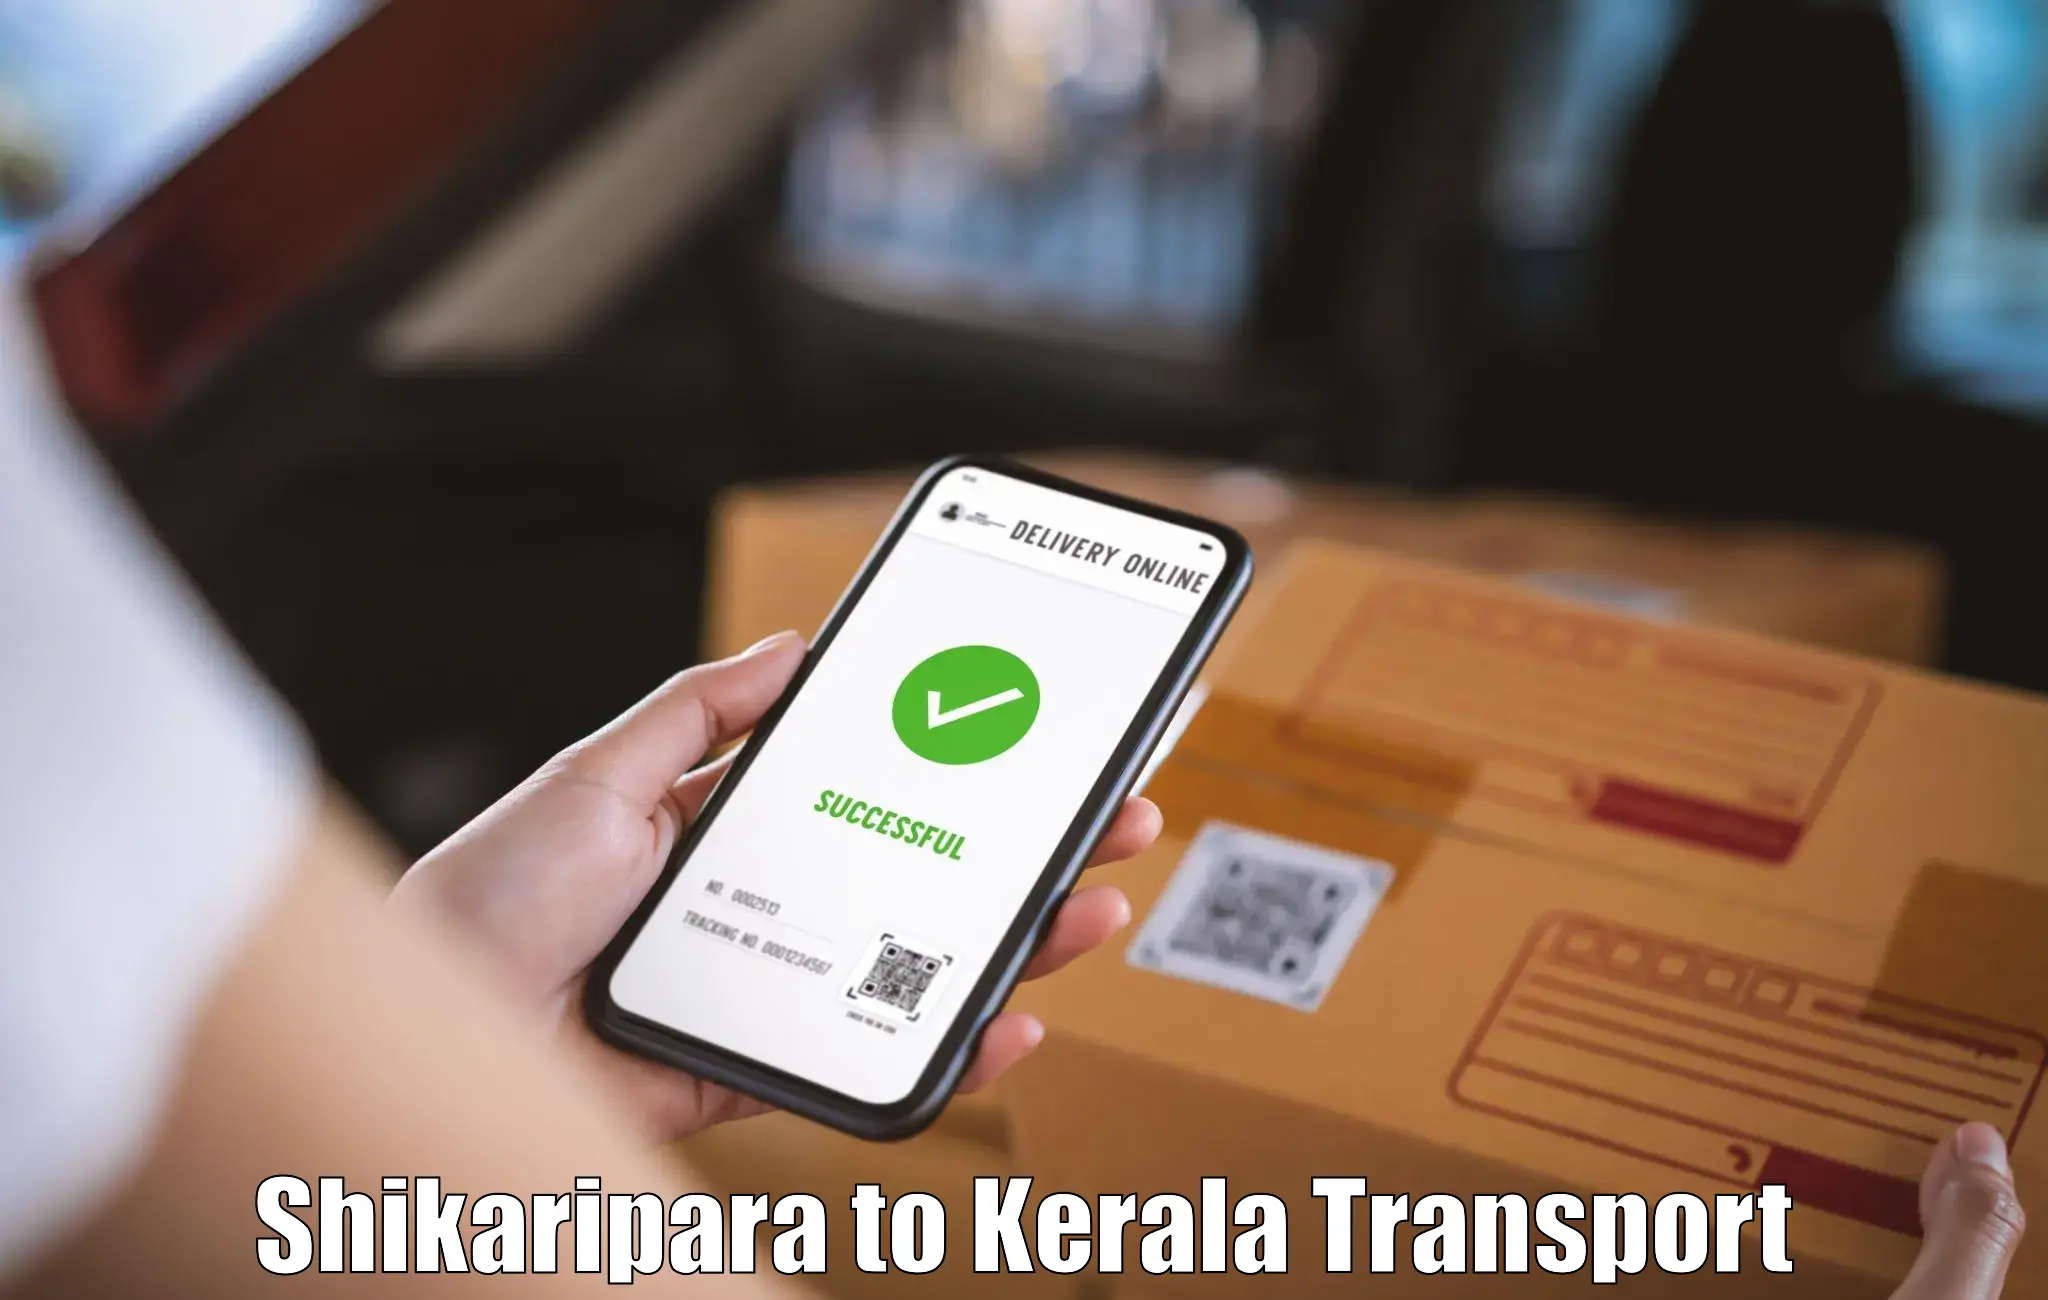 Transport shared services in Shikaripara to Sreekandapuram